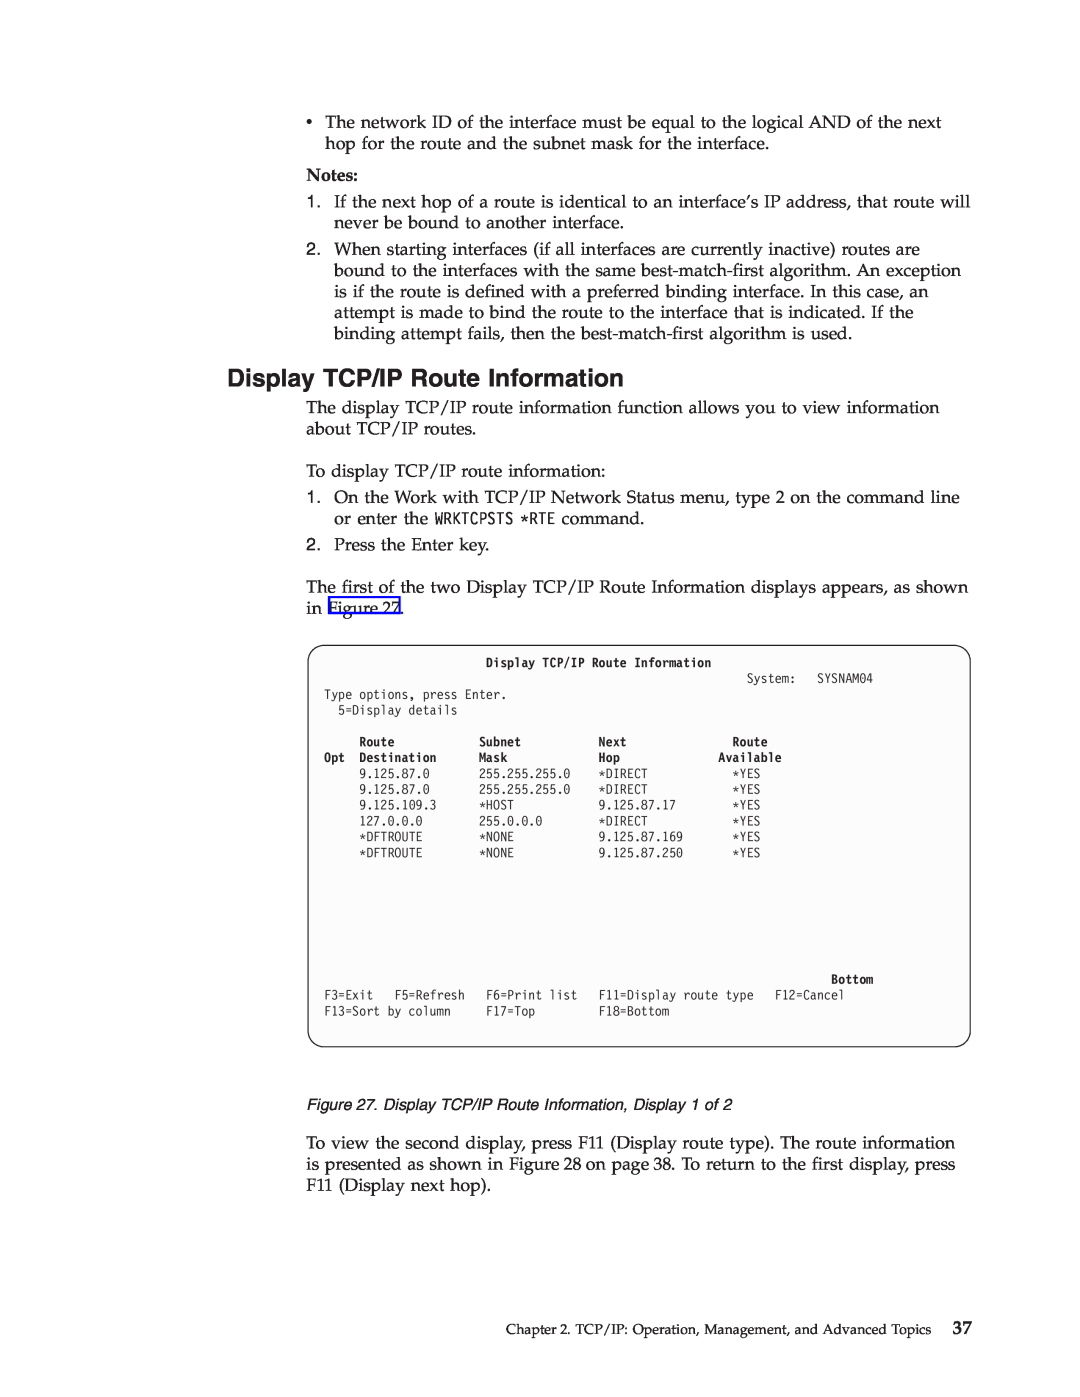 IBM SC41-5420-04 manual Display TCP/IP Route Information, Notes 